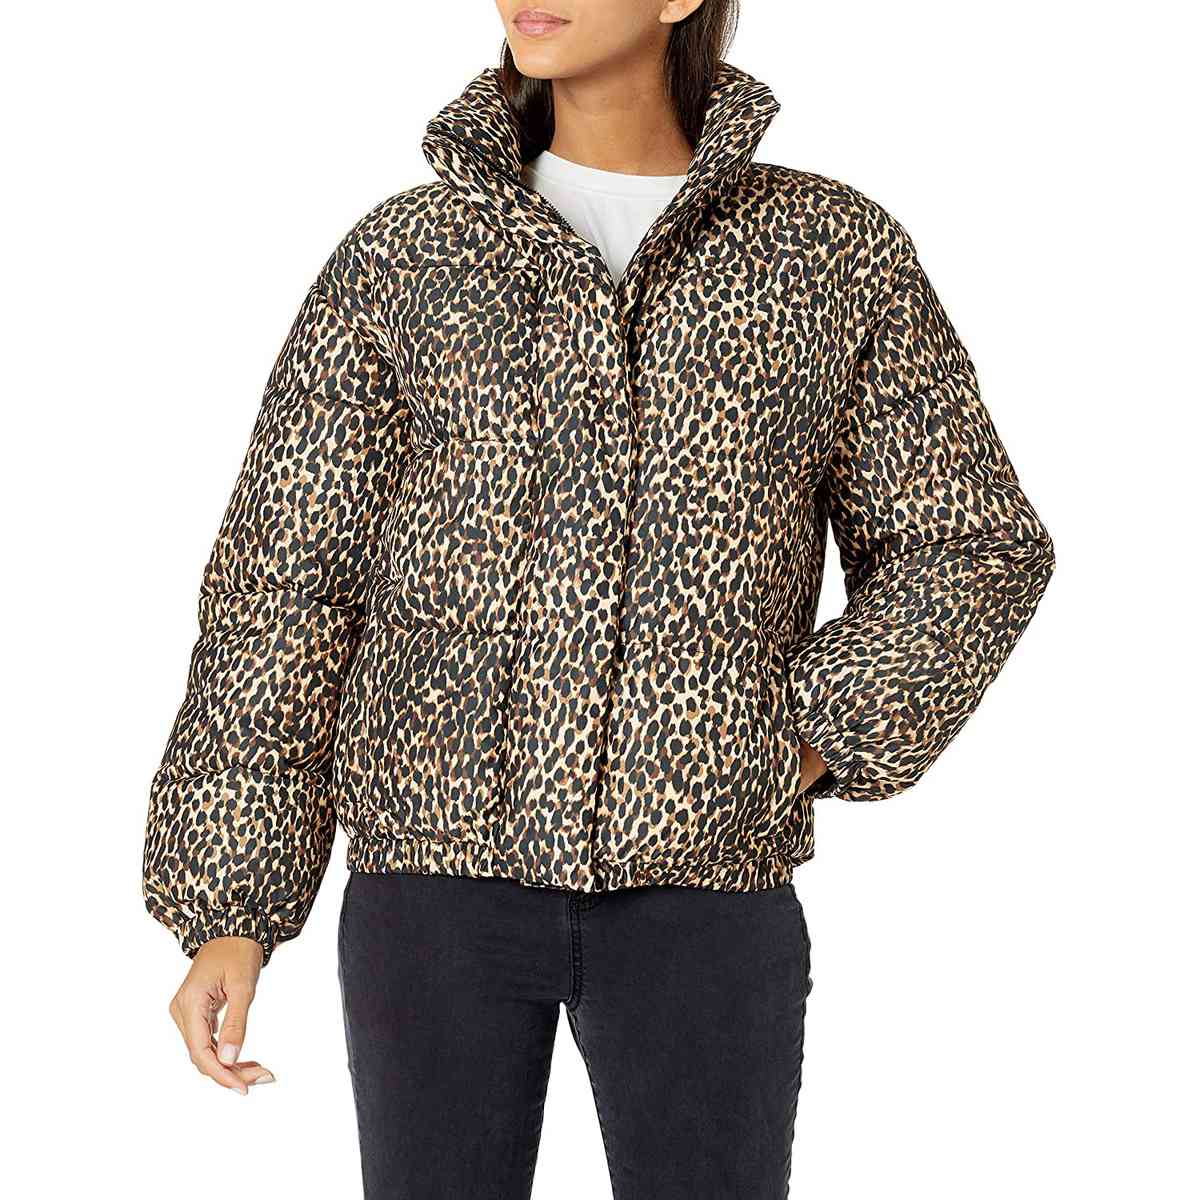 YOcheerful Women Down Coat Down Jacket Warm Vintage Outwear Blouse Hooded Coat Cardigan Puffer Coat Top 